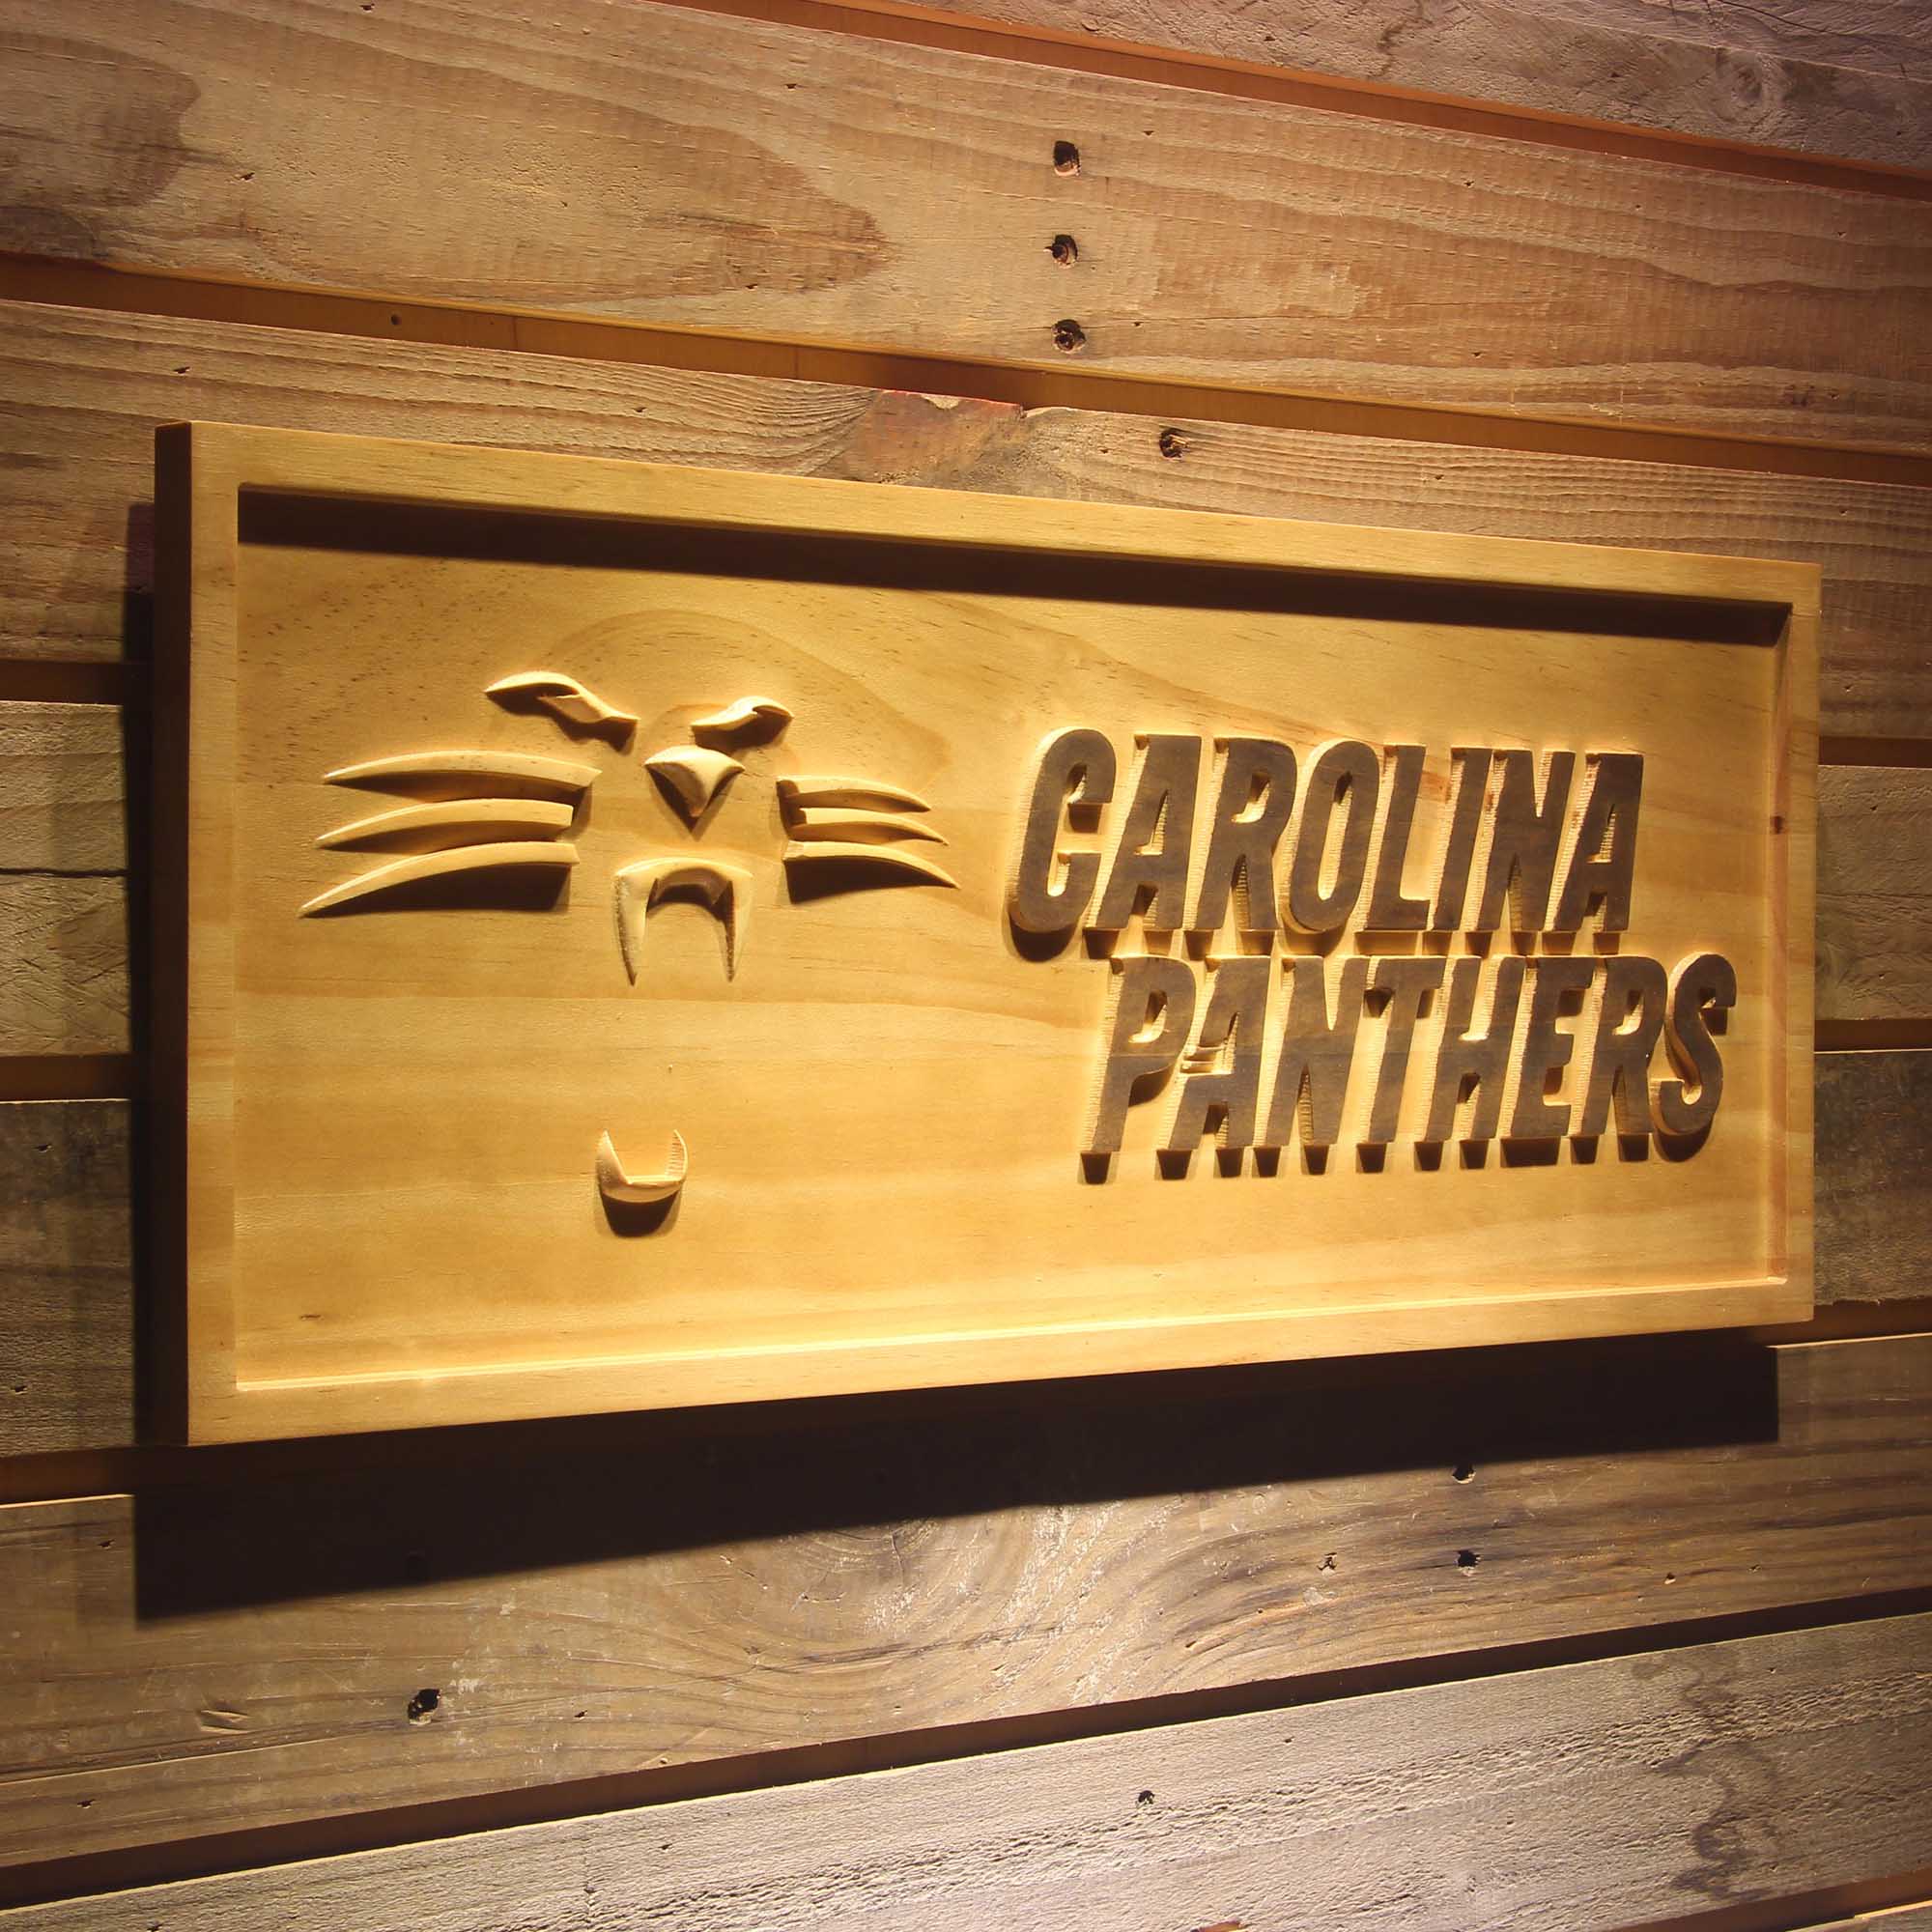 Carolina Panthers Panther,nfl 3D Solid Wooden Craving Sign